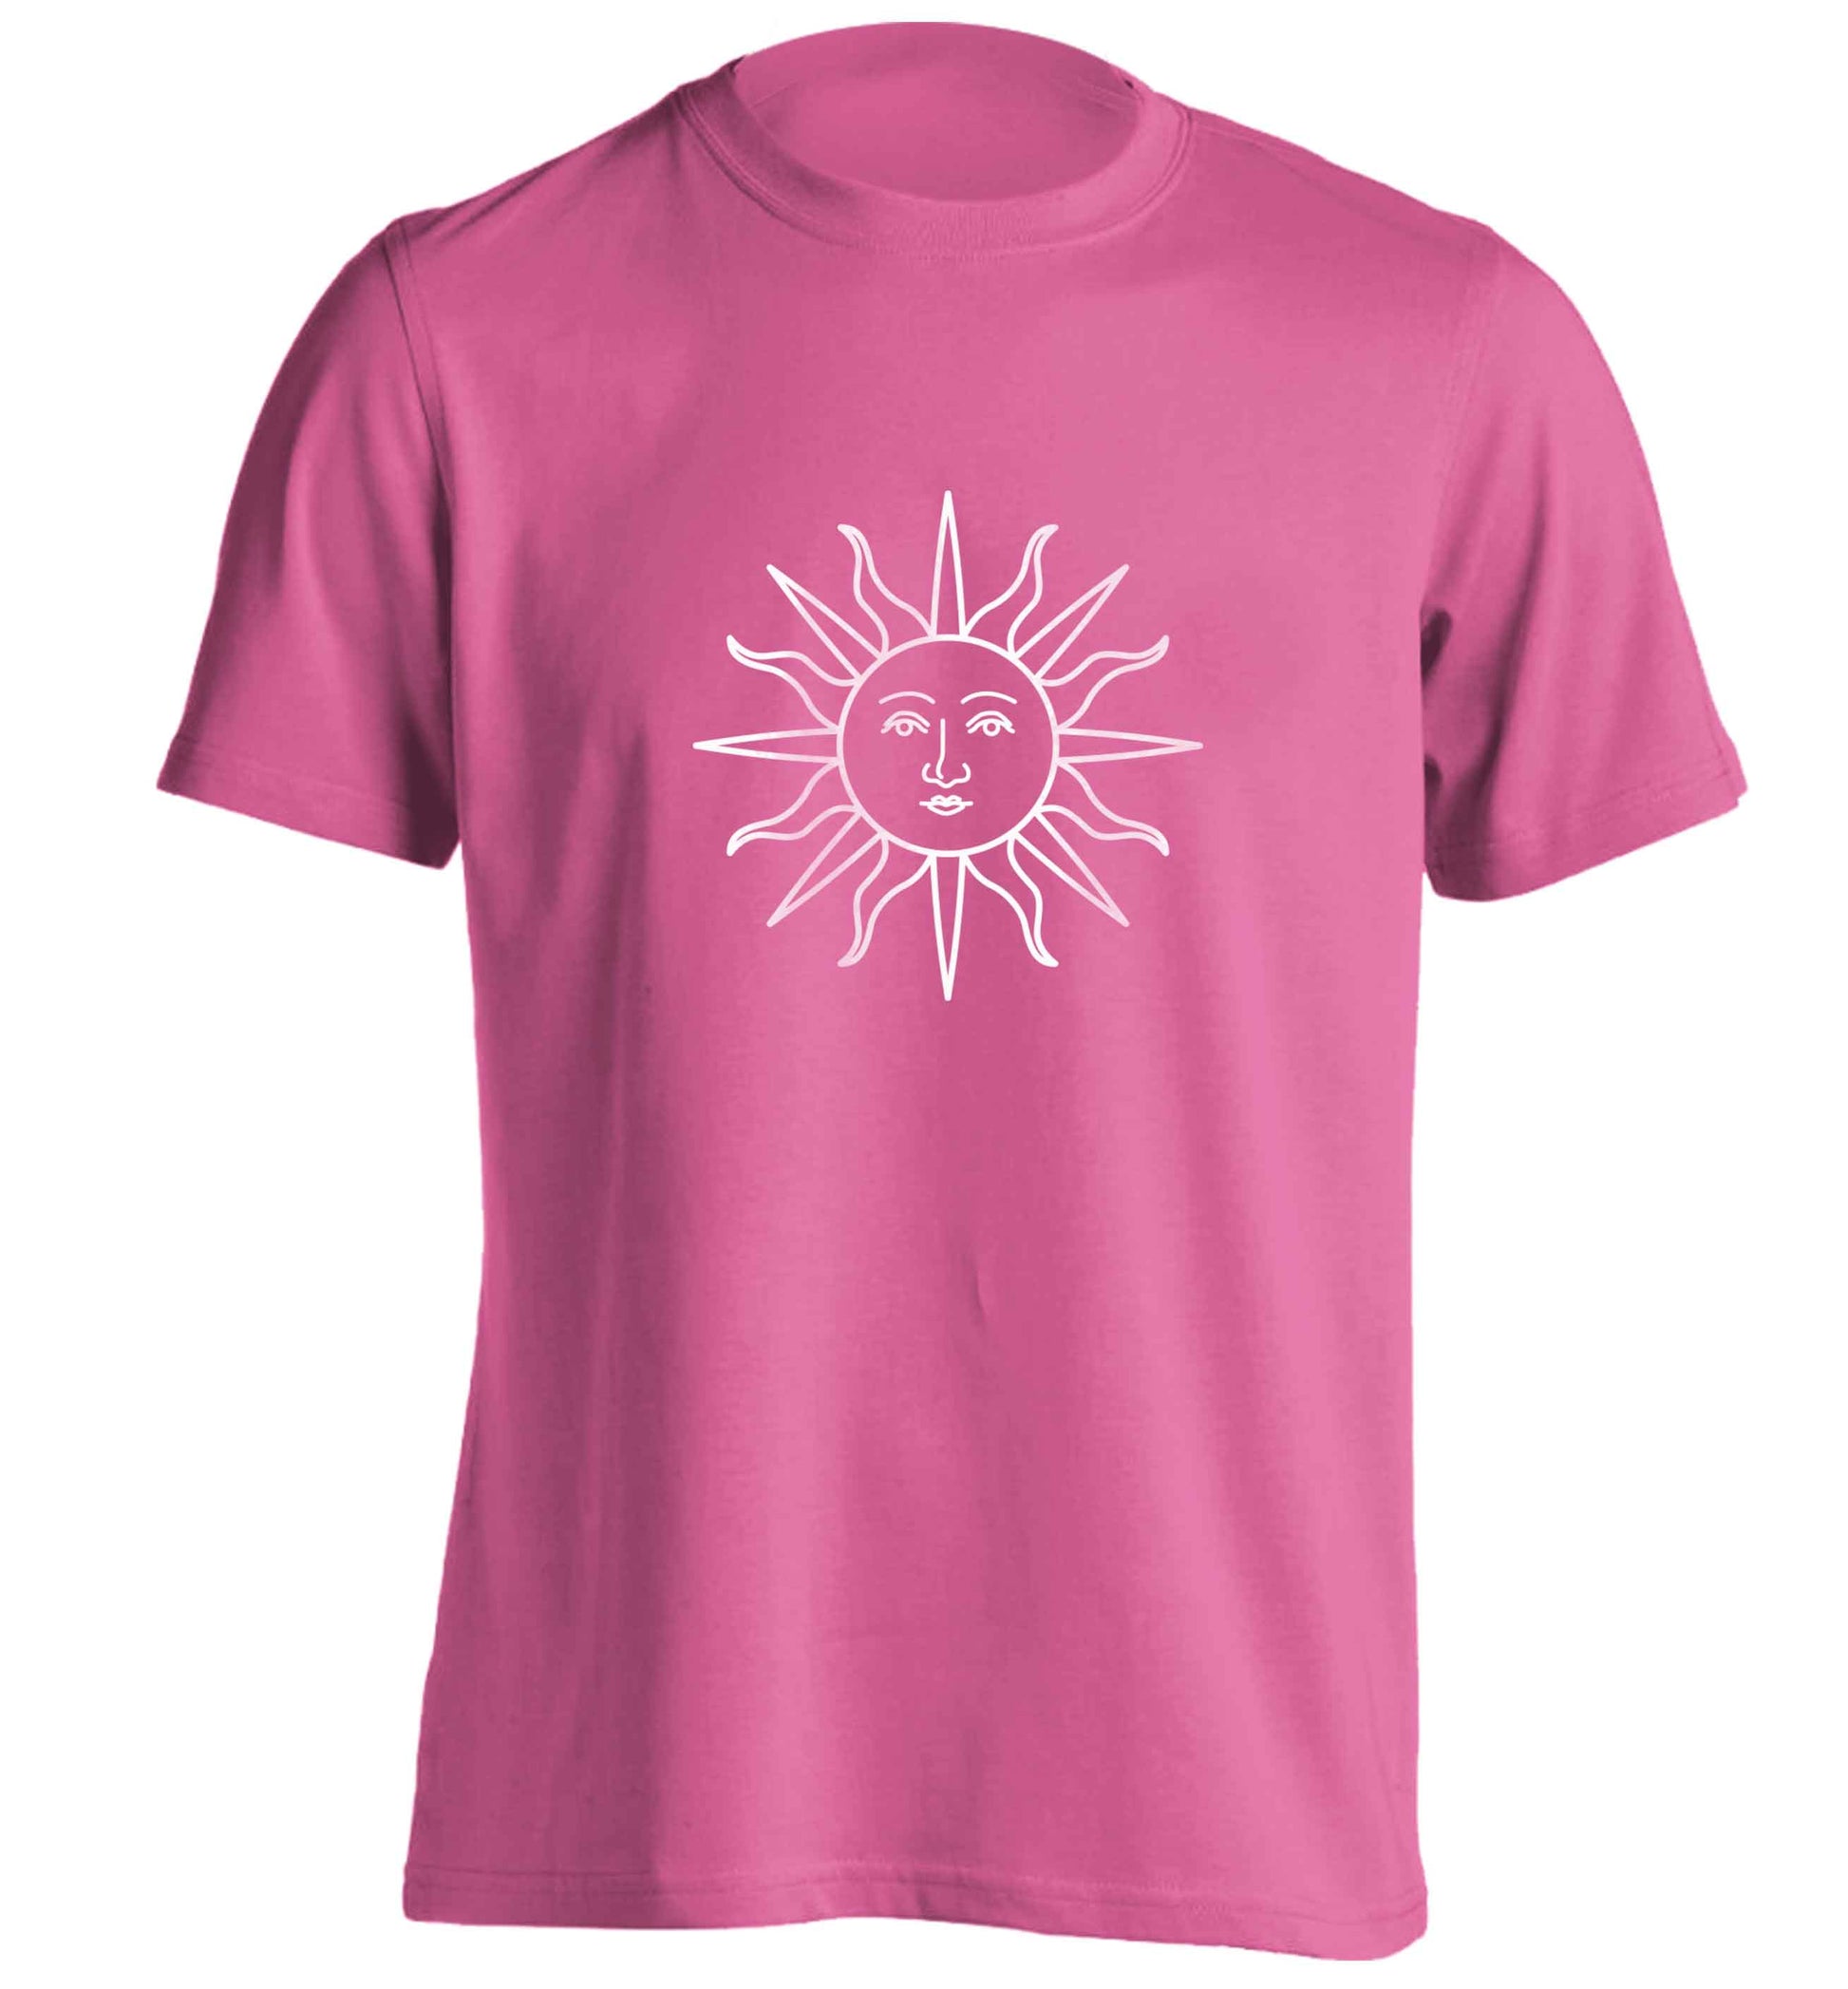 Sun face illustration adults unisex pink Tshirt 2XL